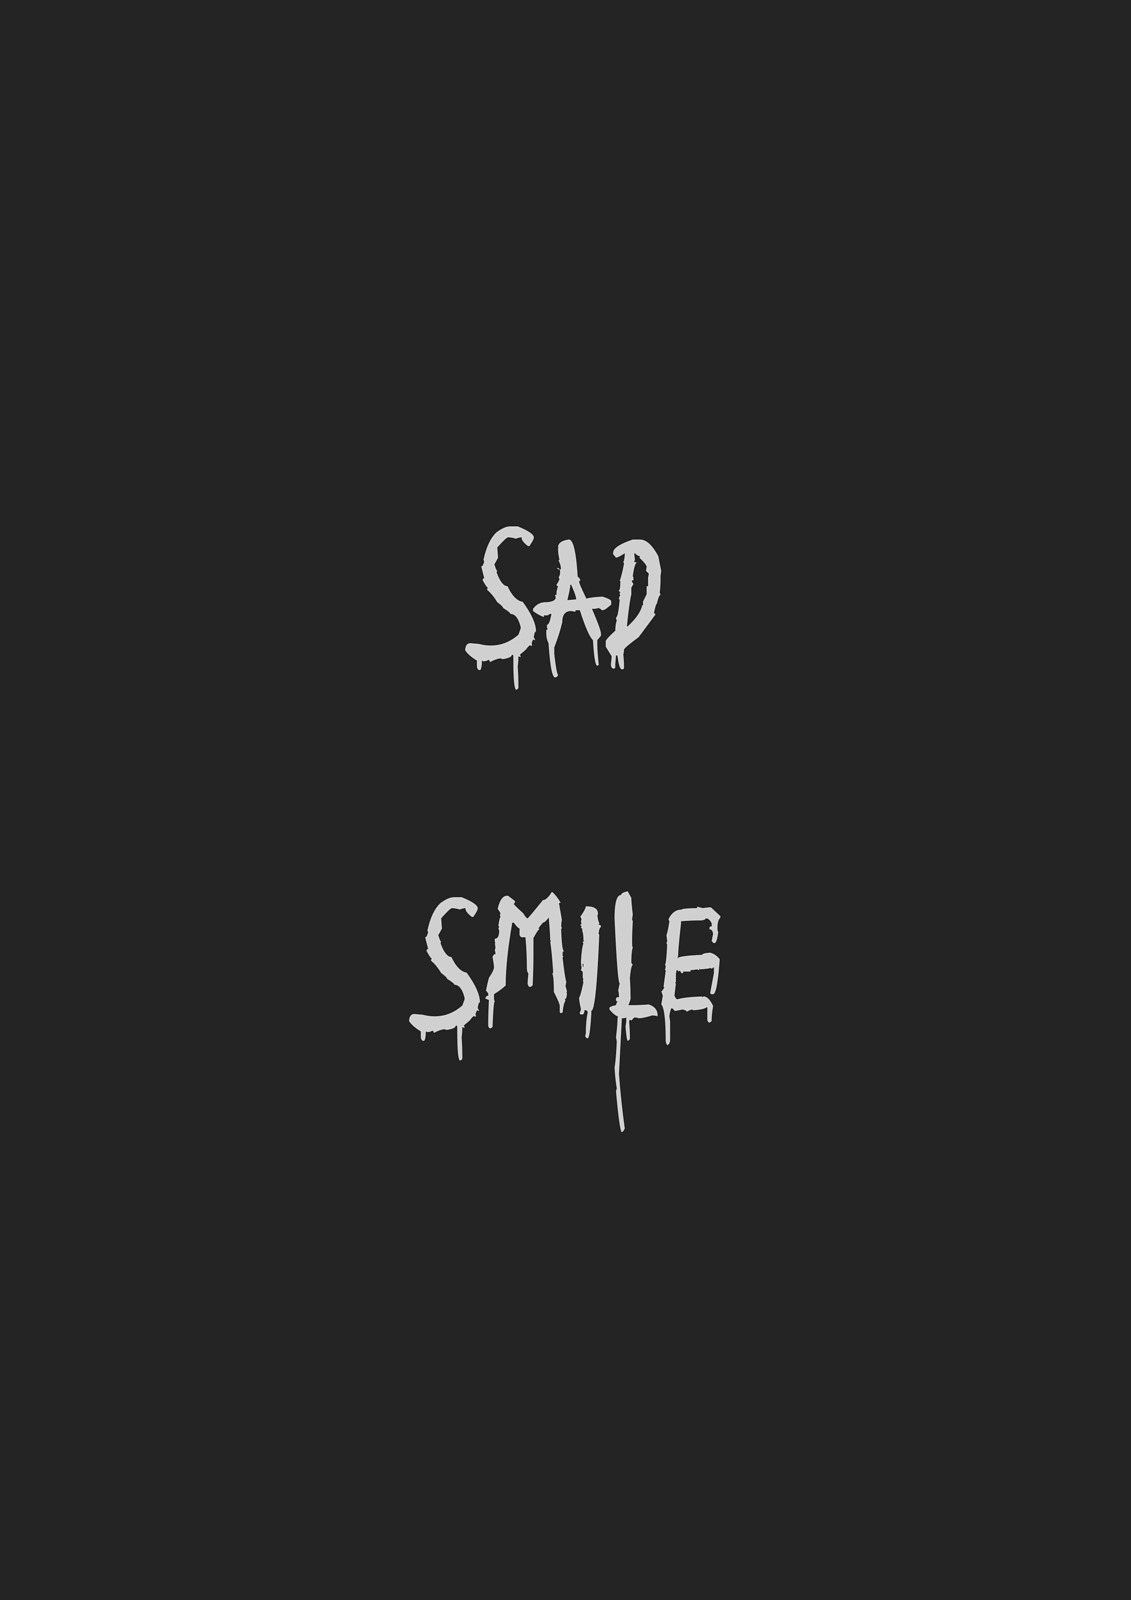 Sad smile print